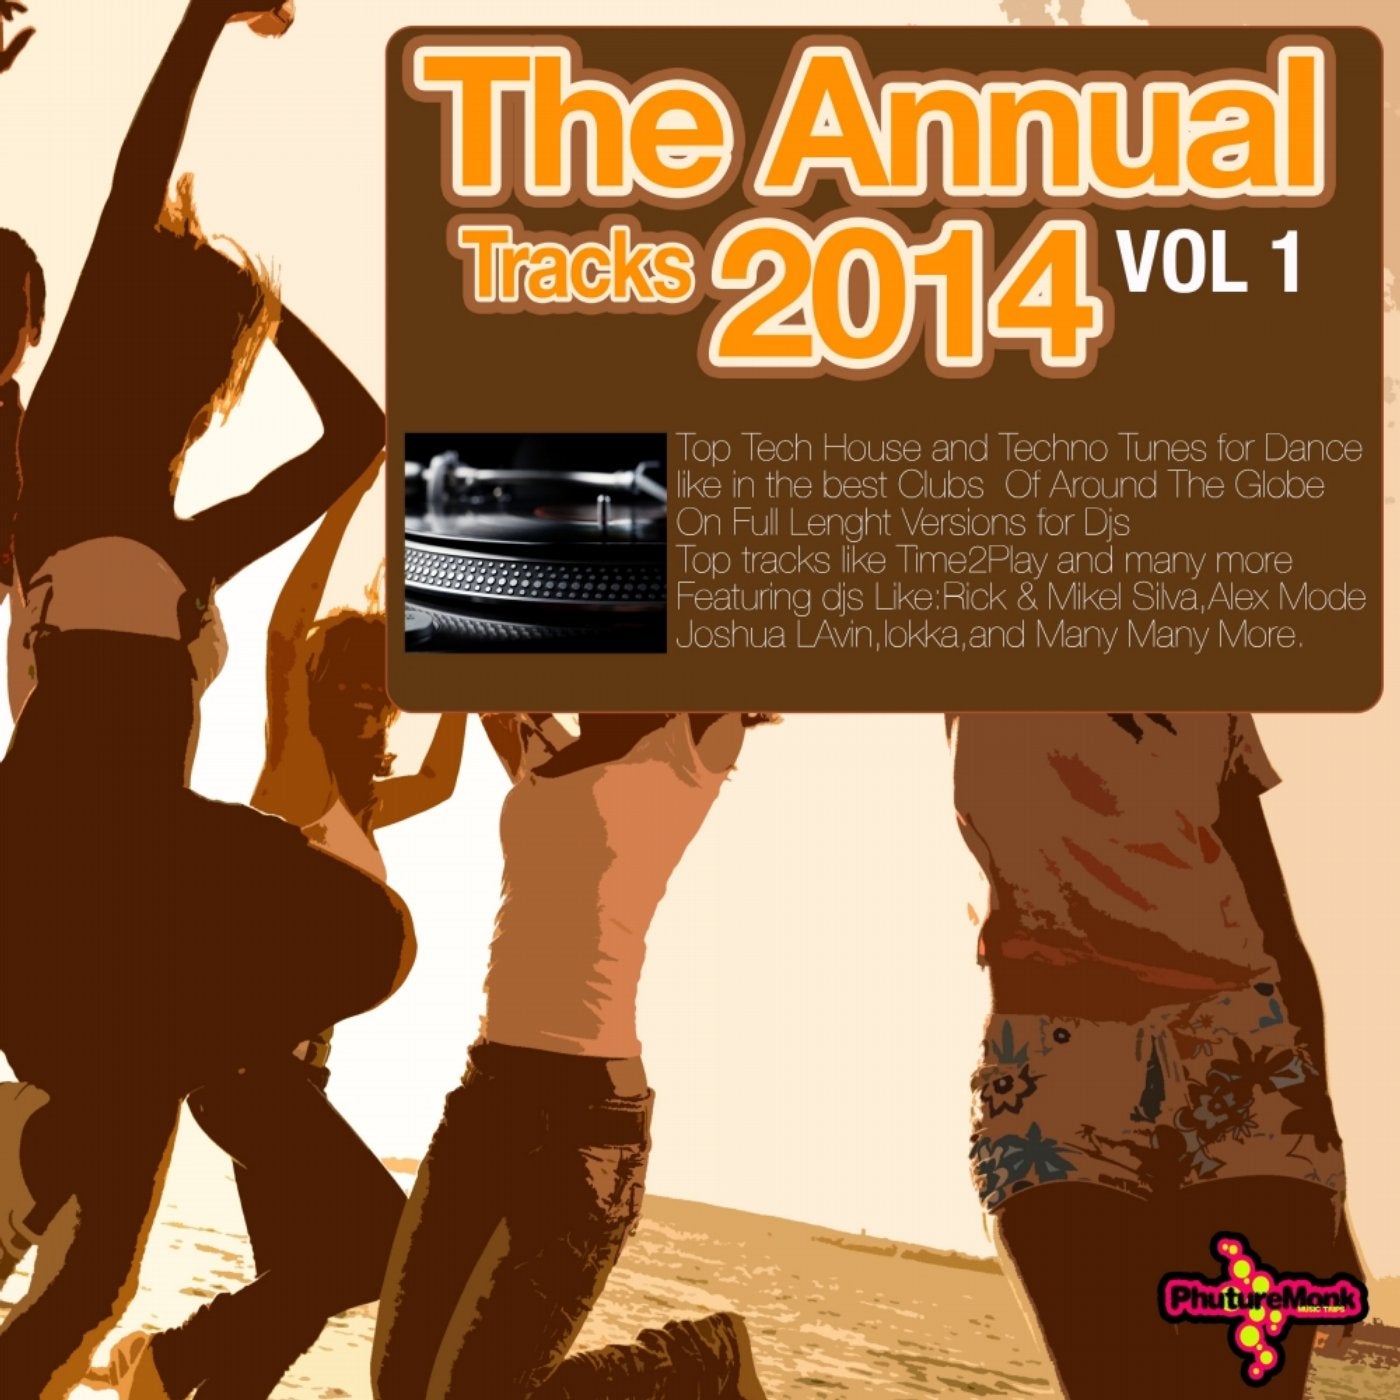 The Annual Tracks 2014 Vol 1